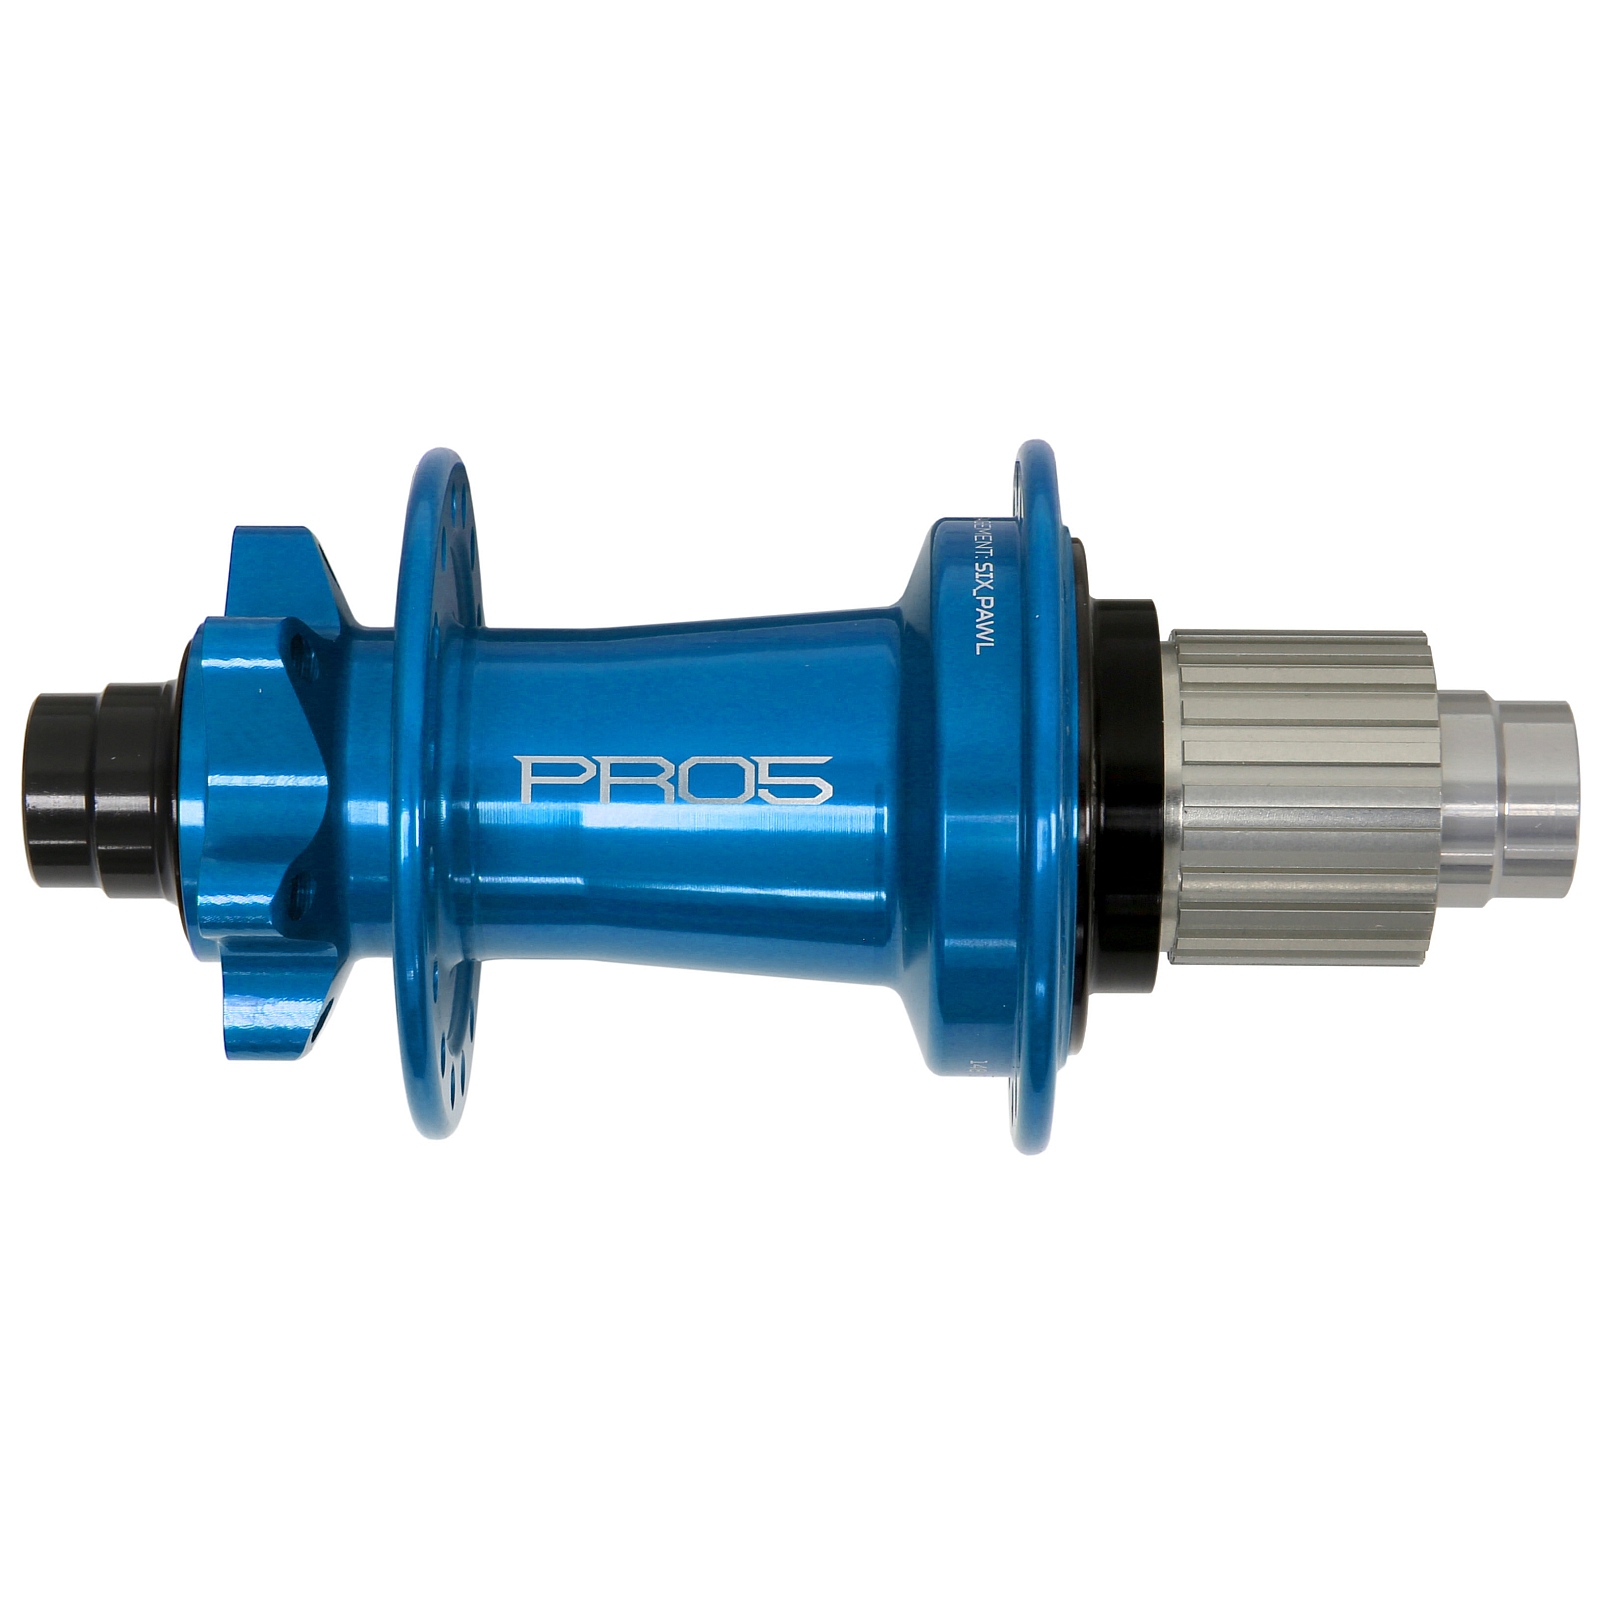 Productfoto van Hope Pro 5 Achterwielnaaf - 6-Bolt - 12x148mm Boost | Shimano Micro Spline - blauw